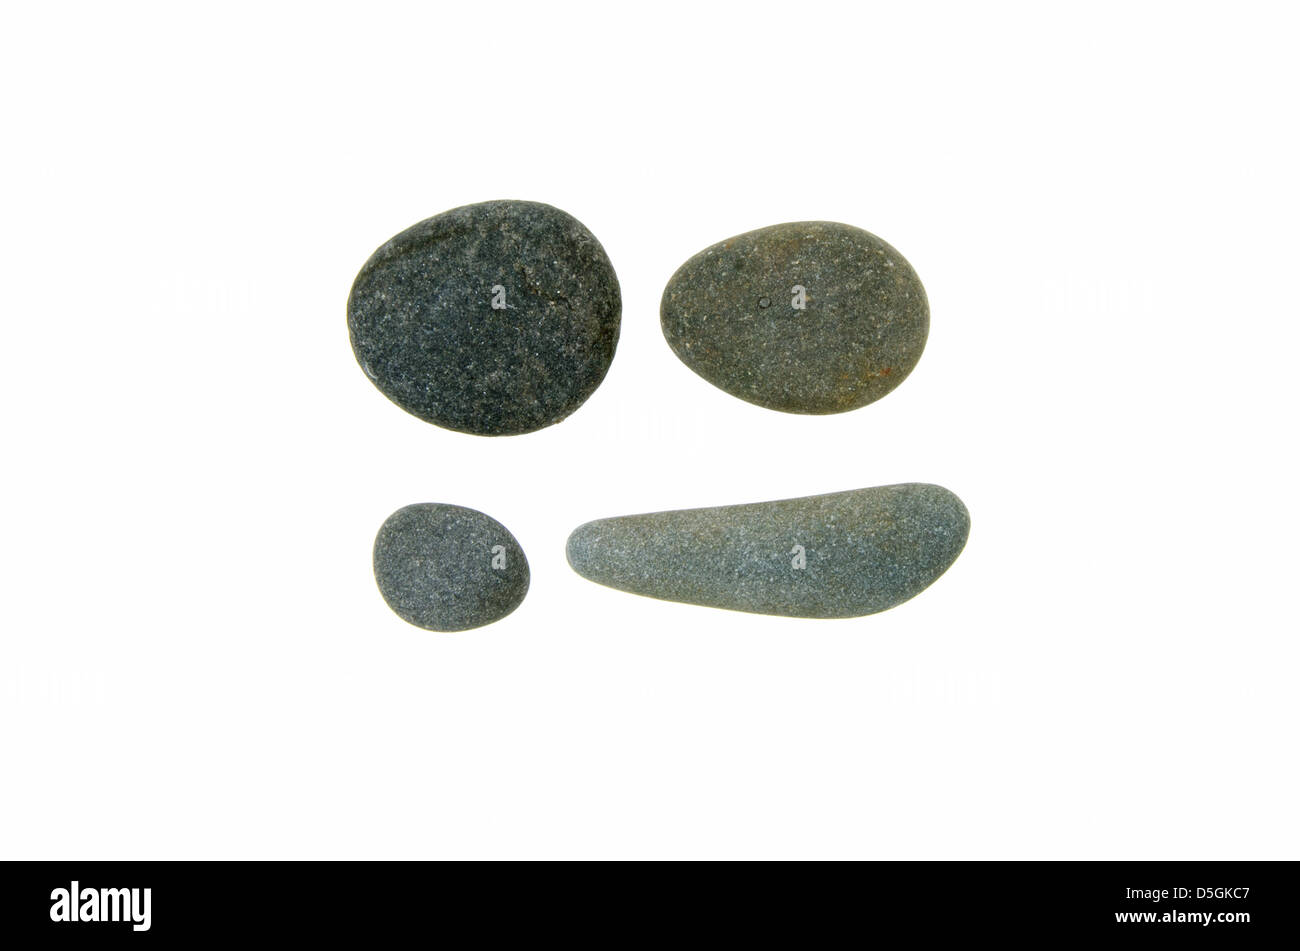 Four smooth, round beach stones of Maine granite and schist. Stock Photo